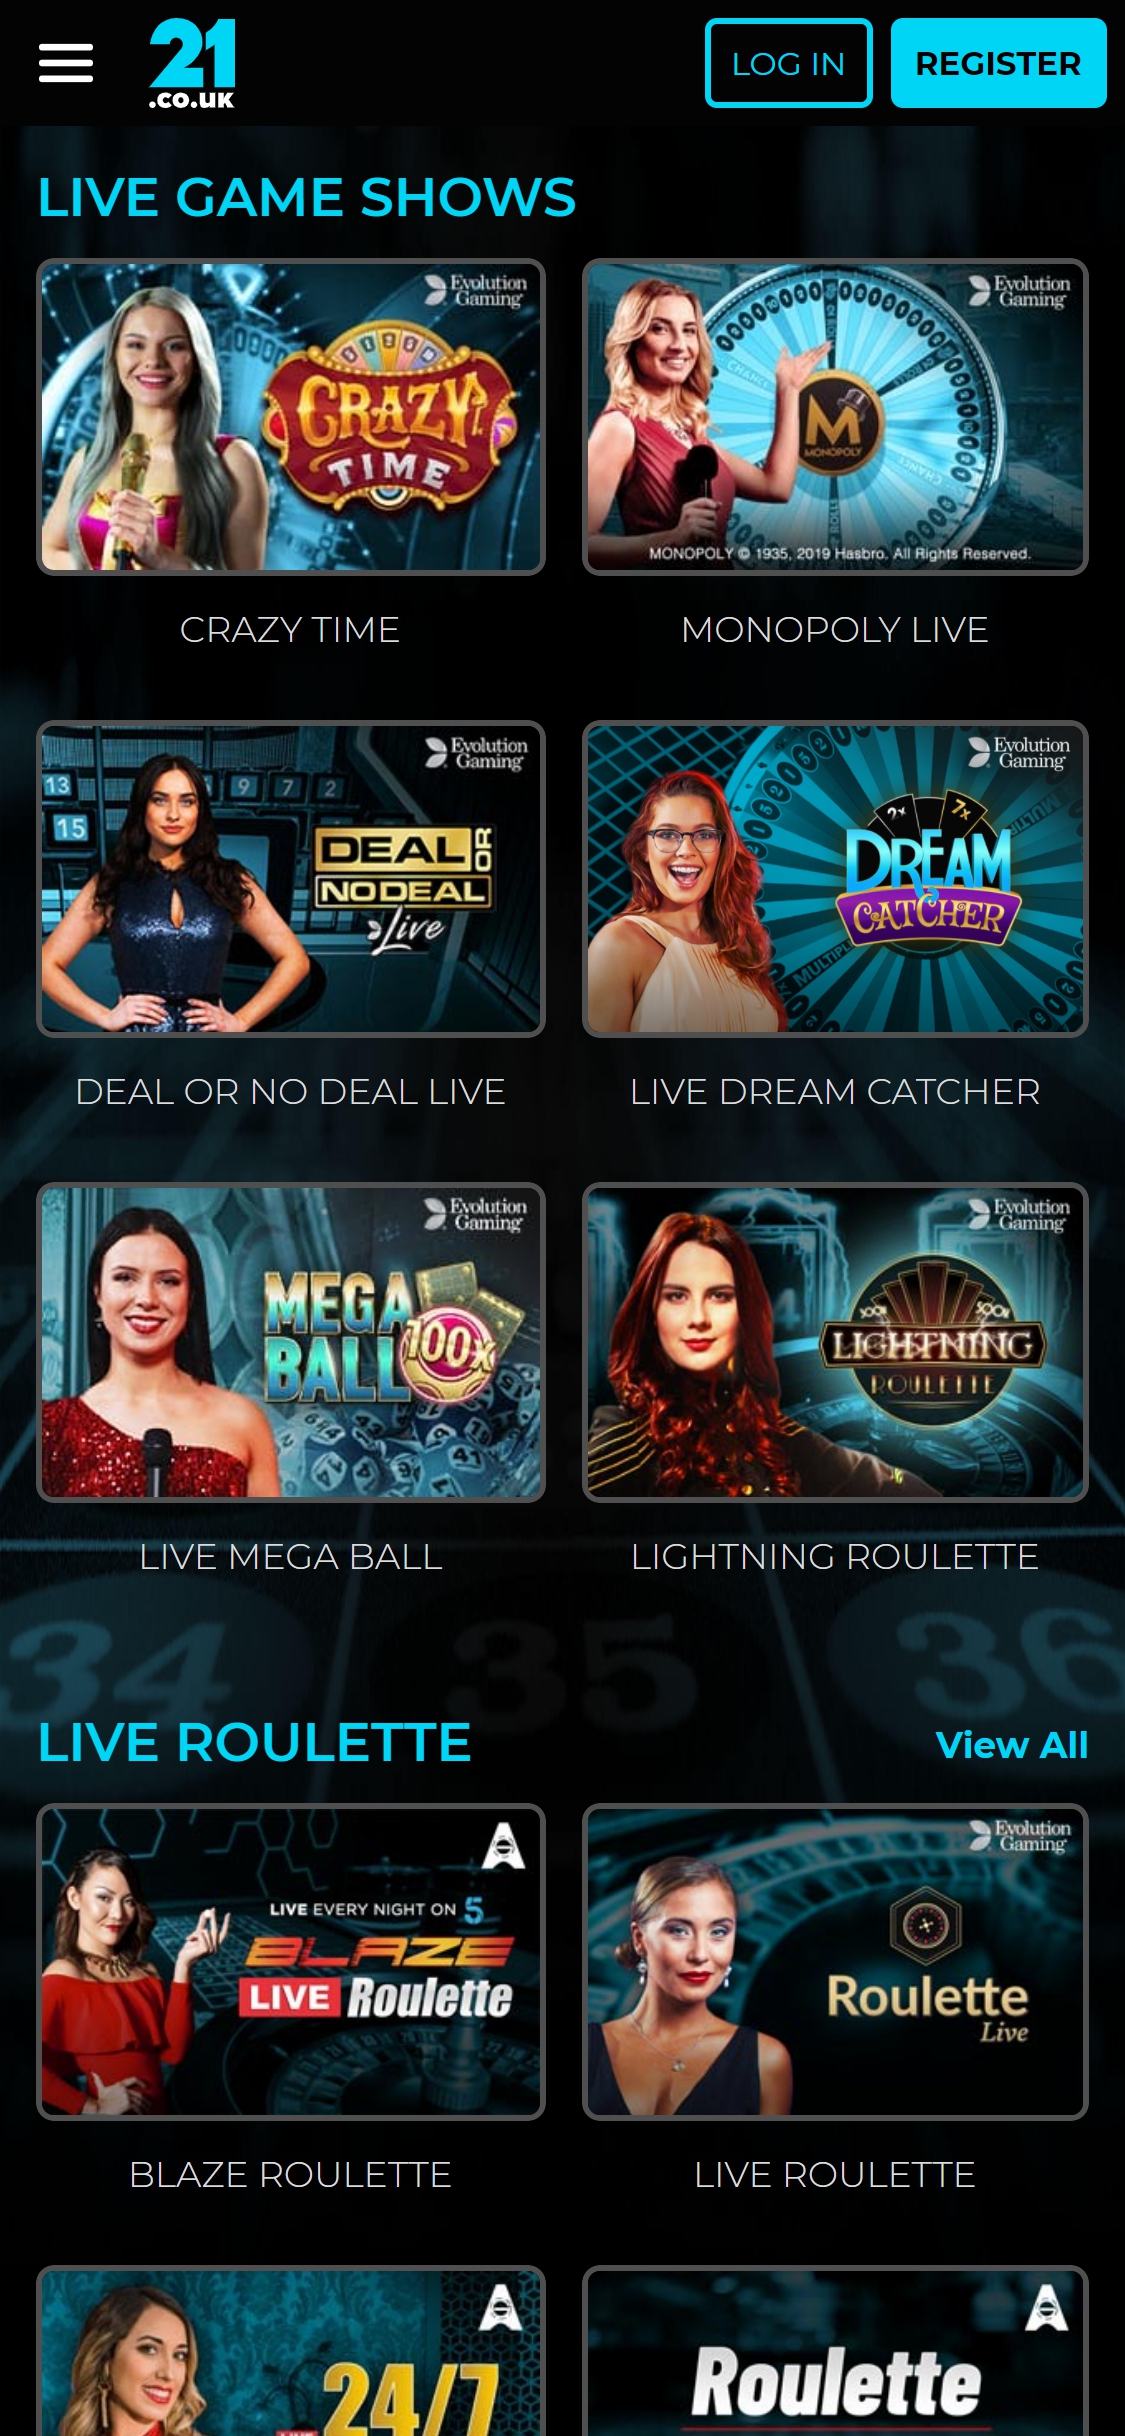 21.co.uk Casino Mobile Live Dealer Games Review